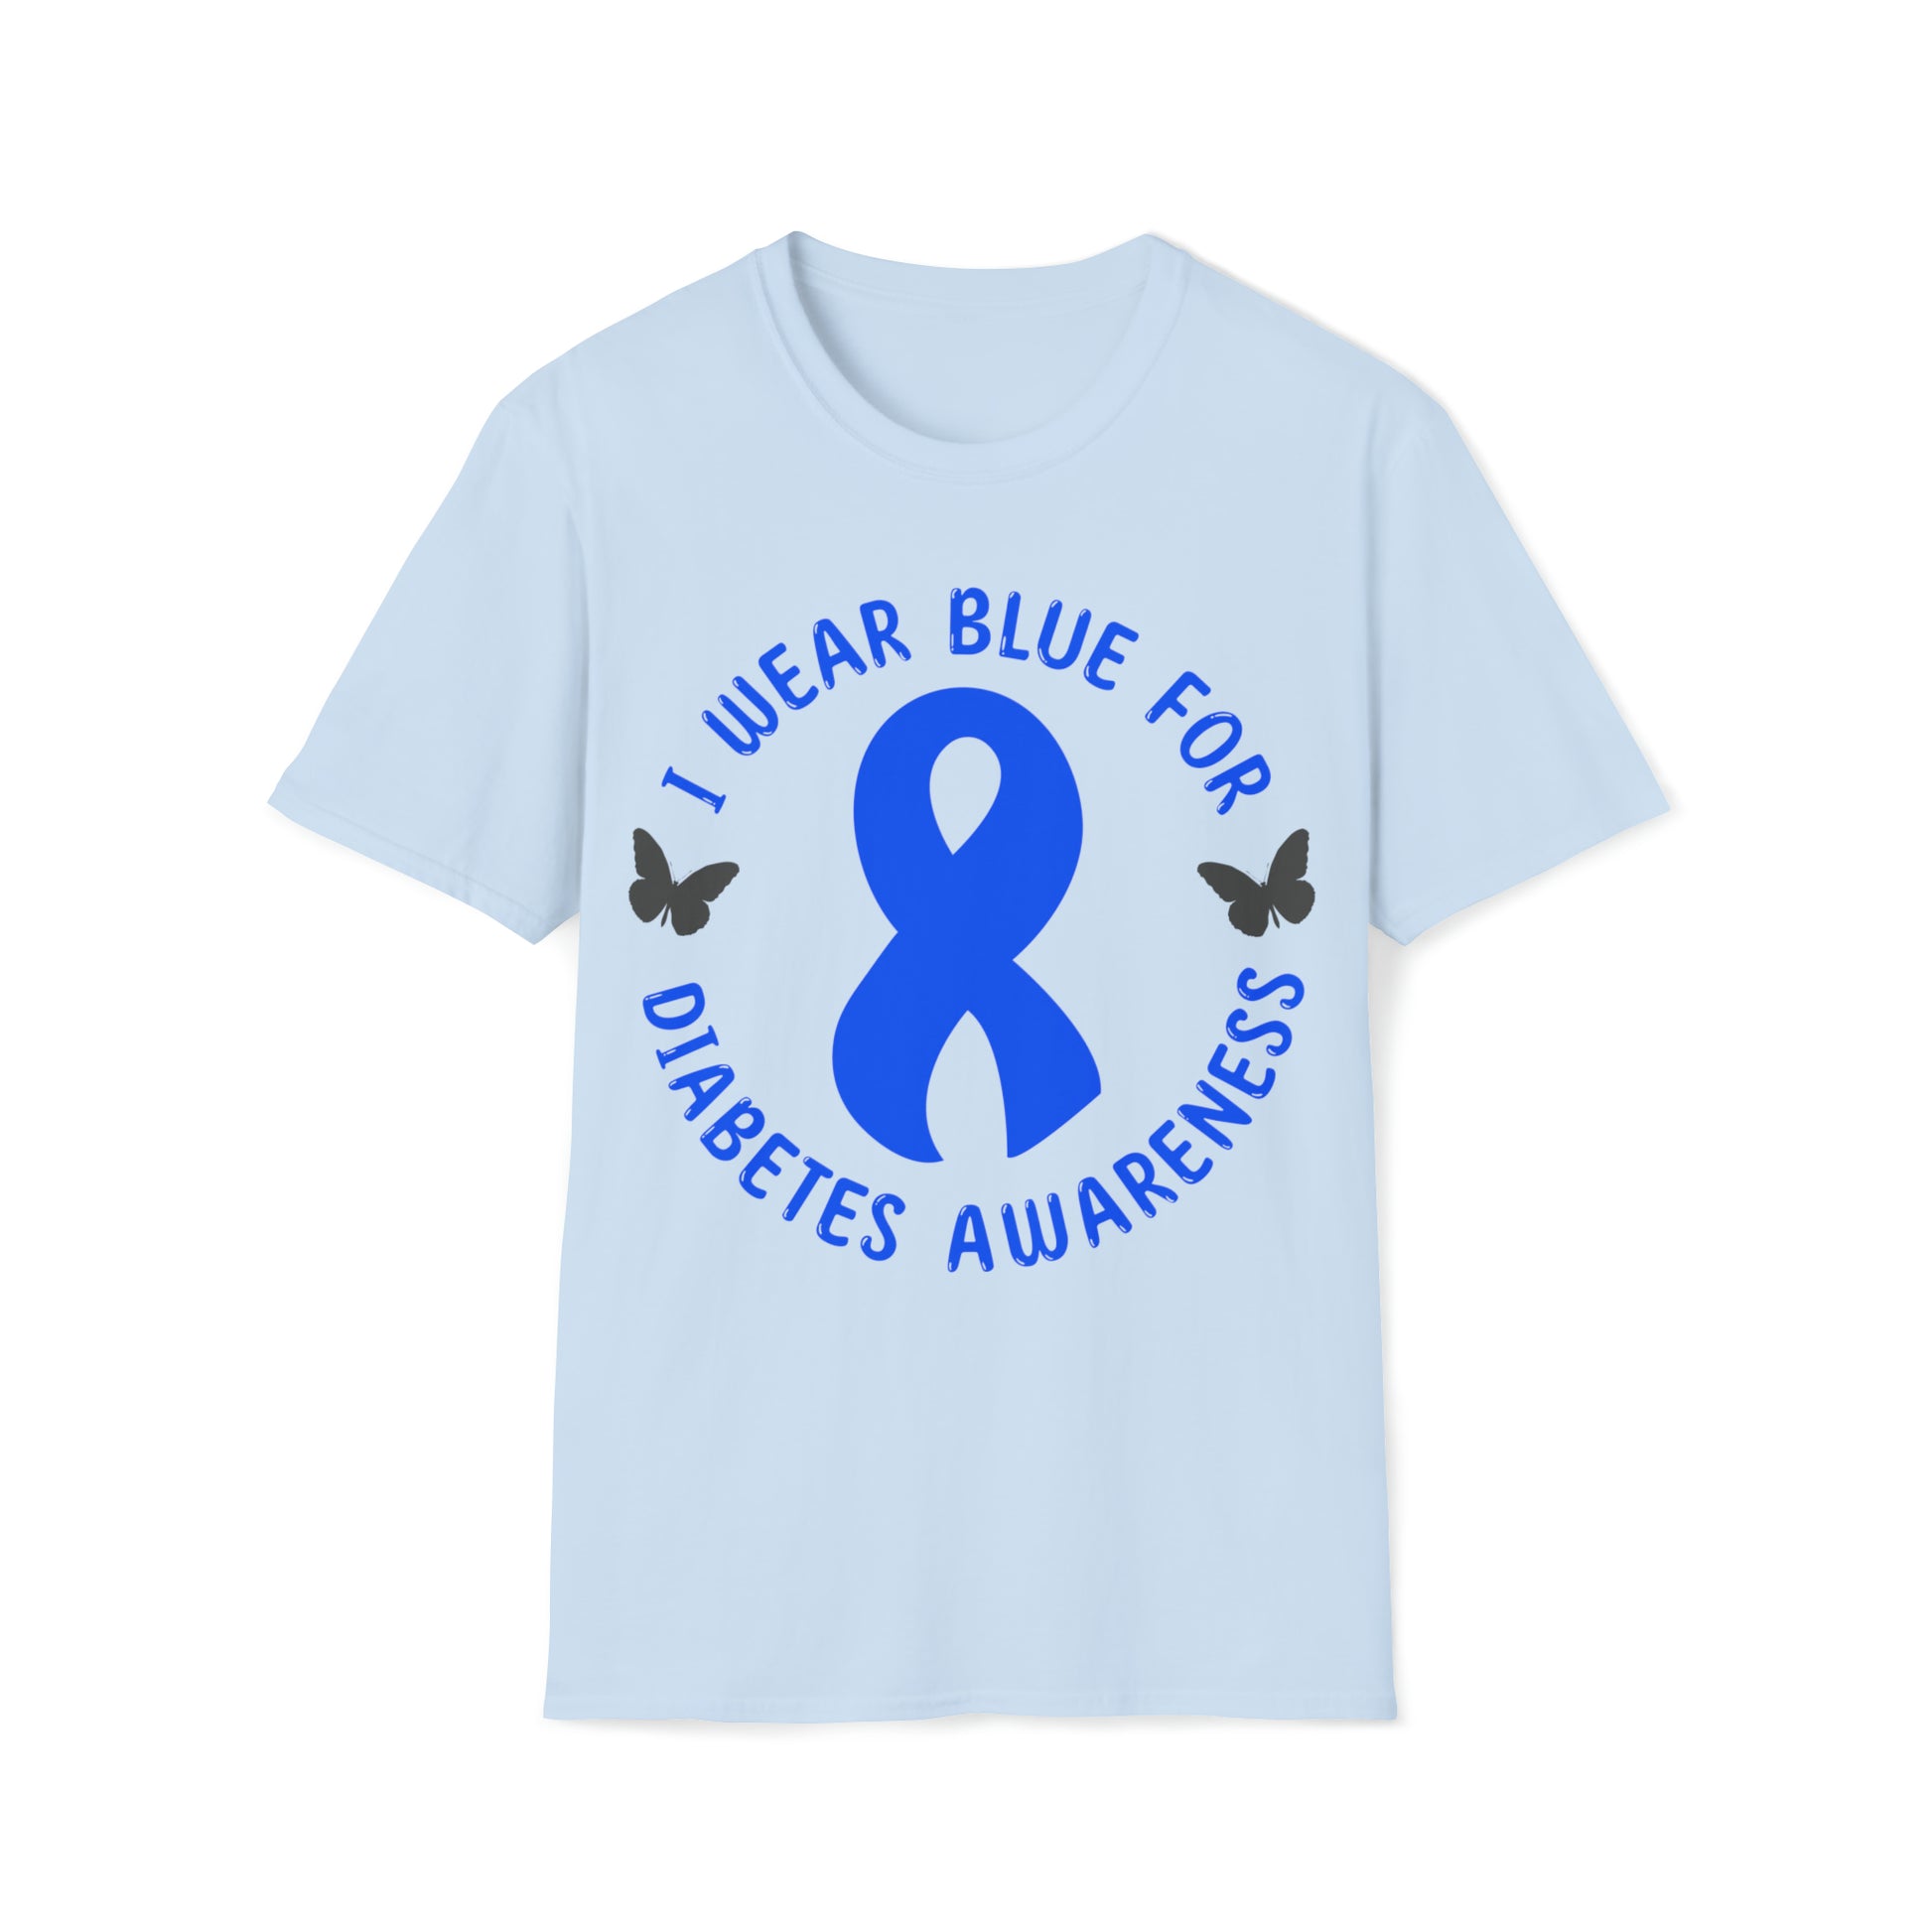 I Wear Blue For Diabetes Awareness Shirt